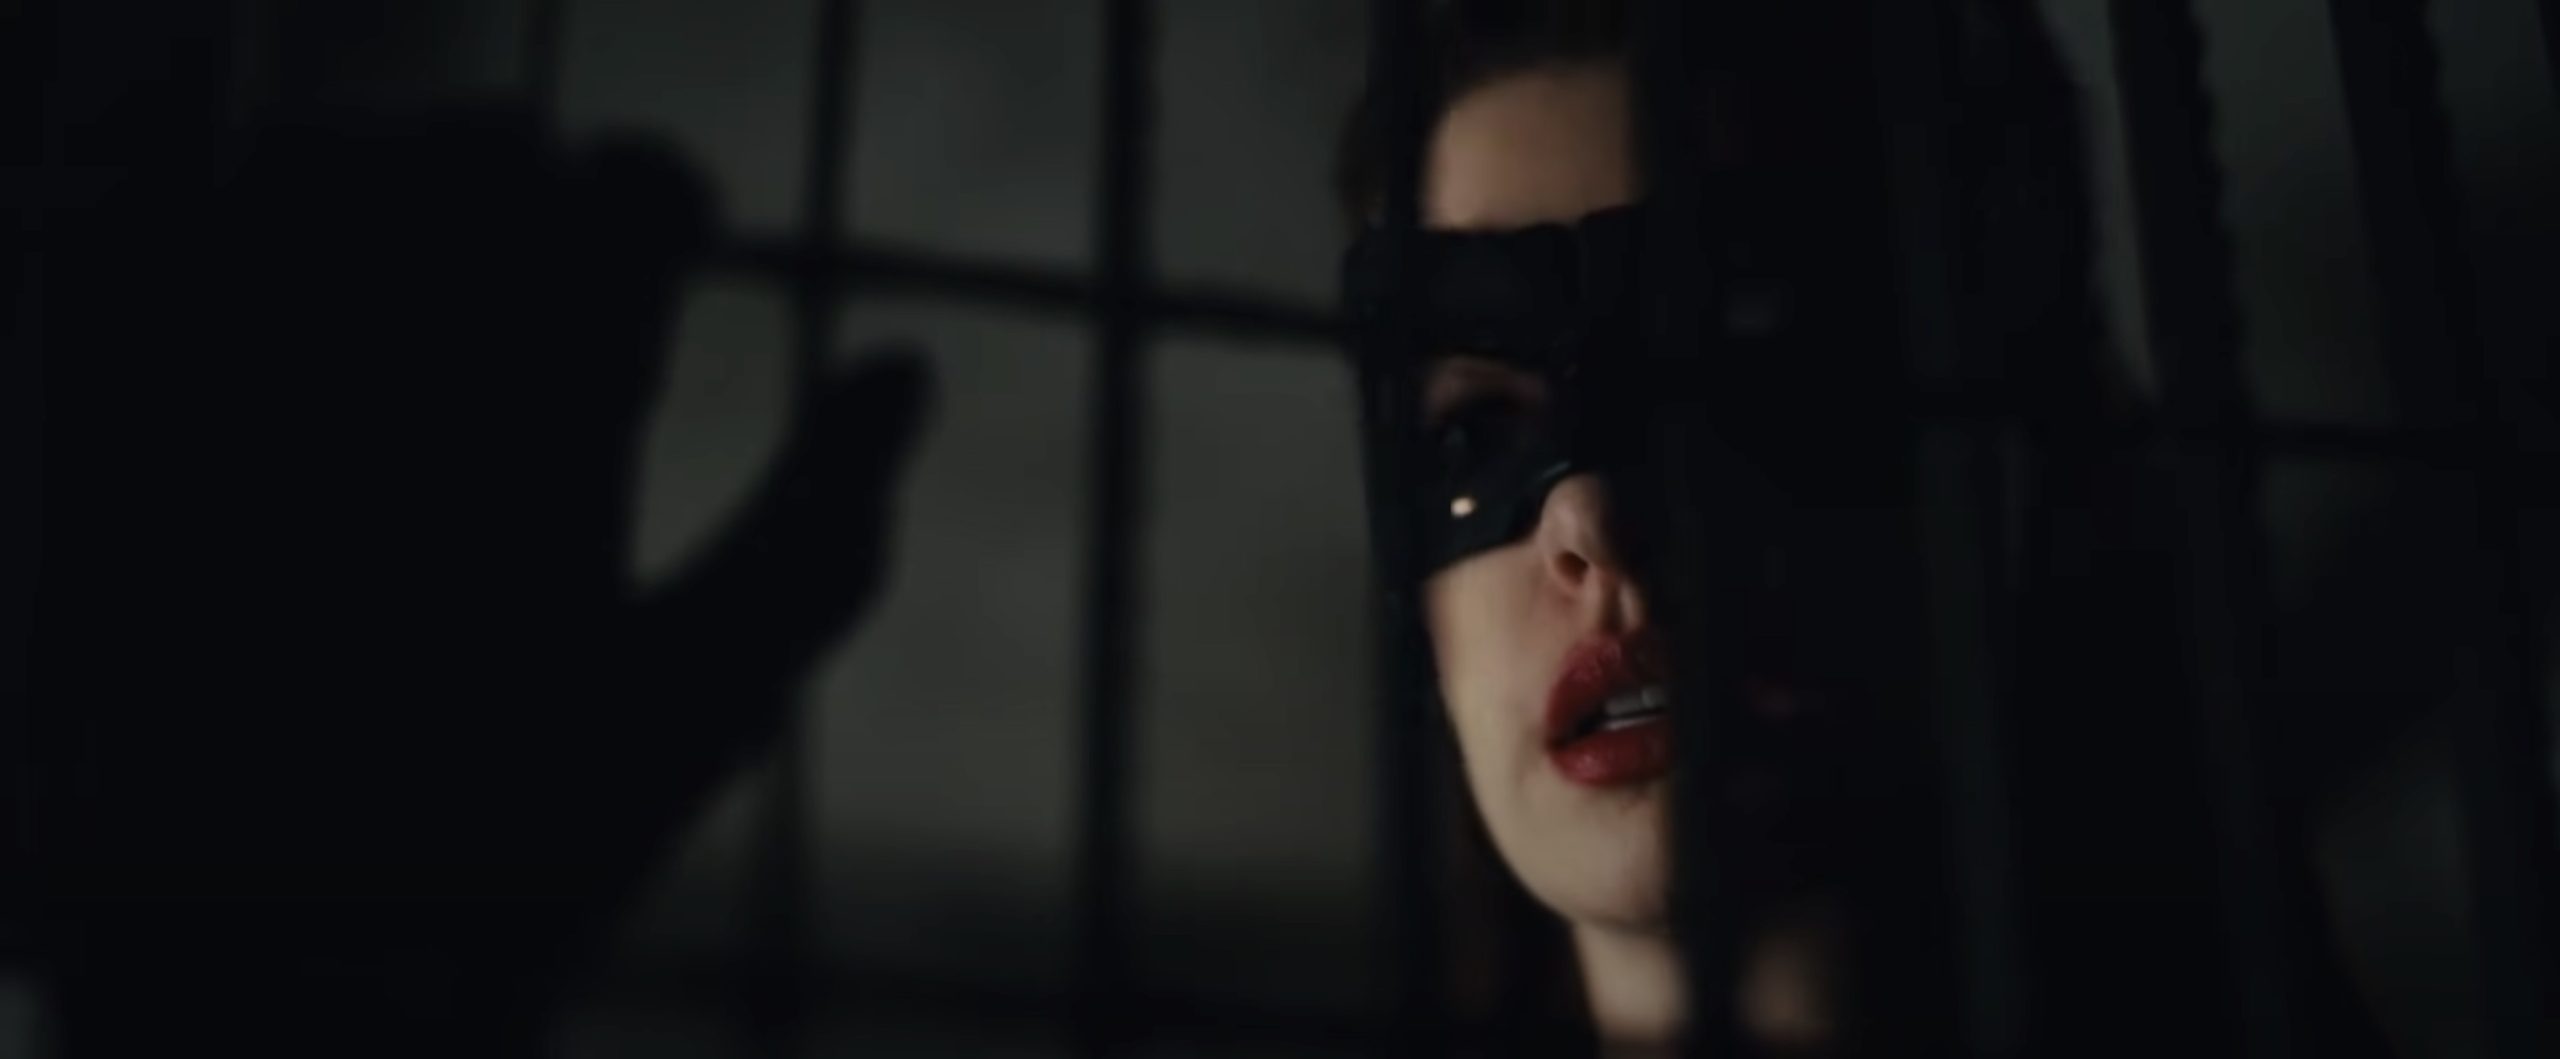 The Dark Knight Rises (2012) starring Anne Hathaway